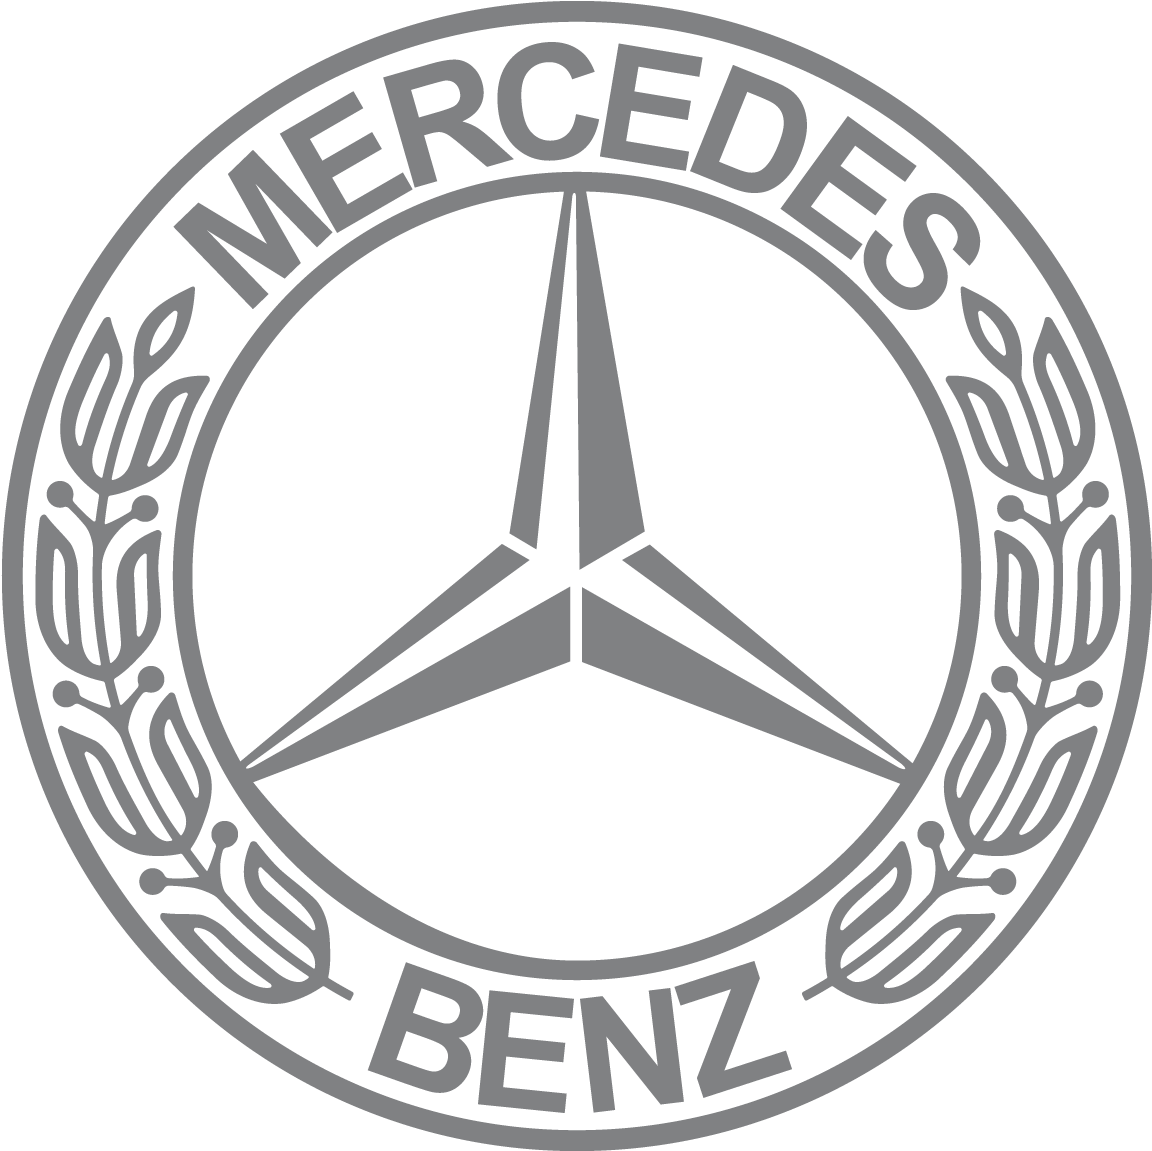 Download Mercedes Benz Laurel Wreath Vintage And Star Logo Vector